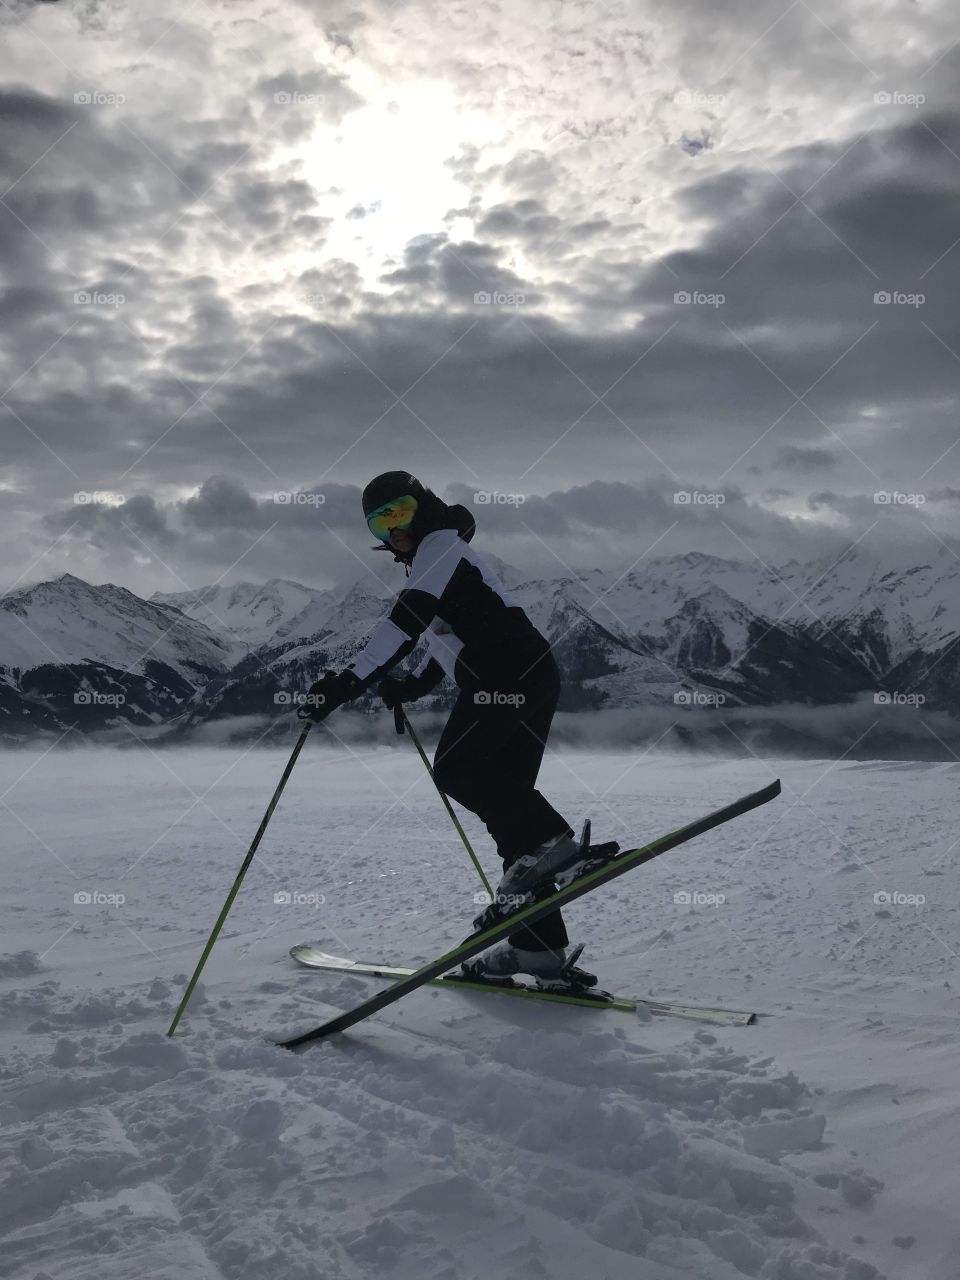 I love skiing 